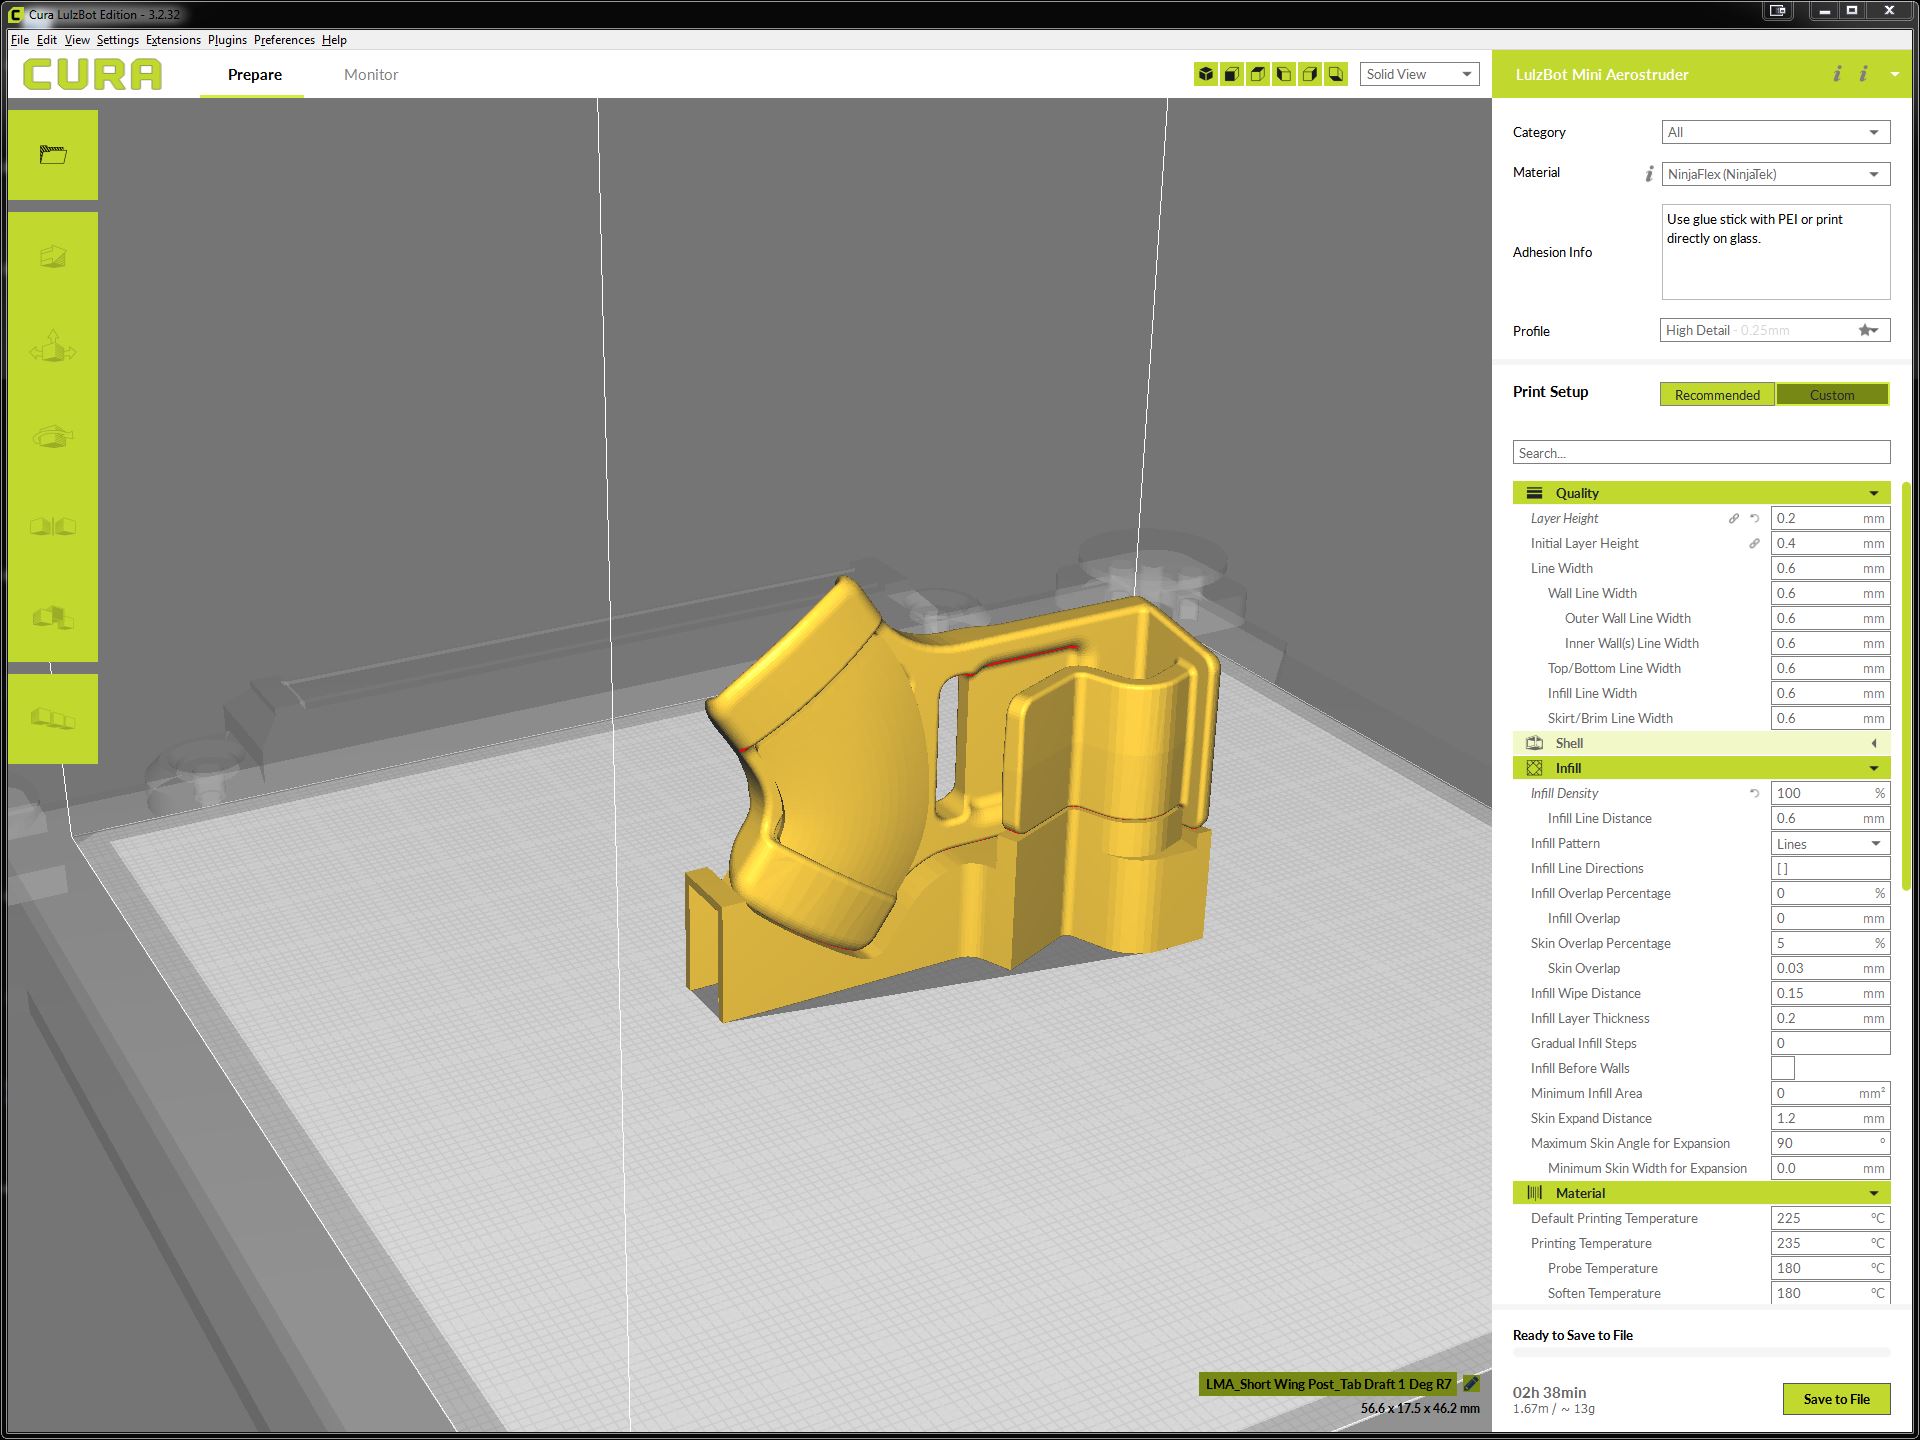 Luna Sandal Wing Post 3D Print Setup In Cura on Lulzbot Mini TPU